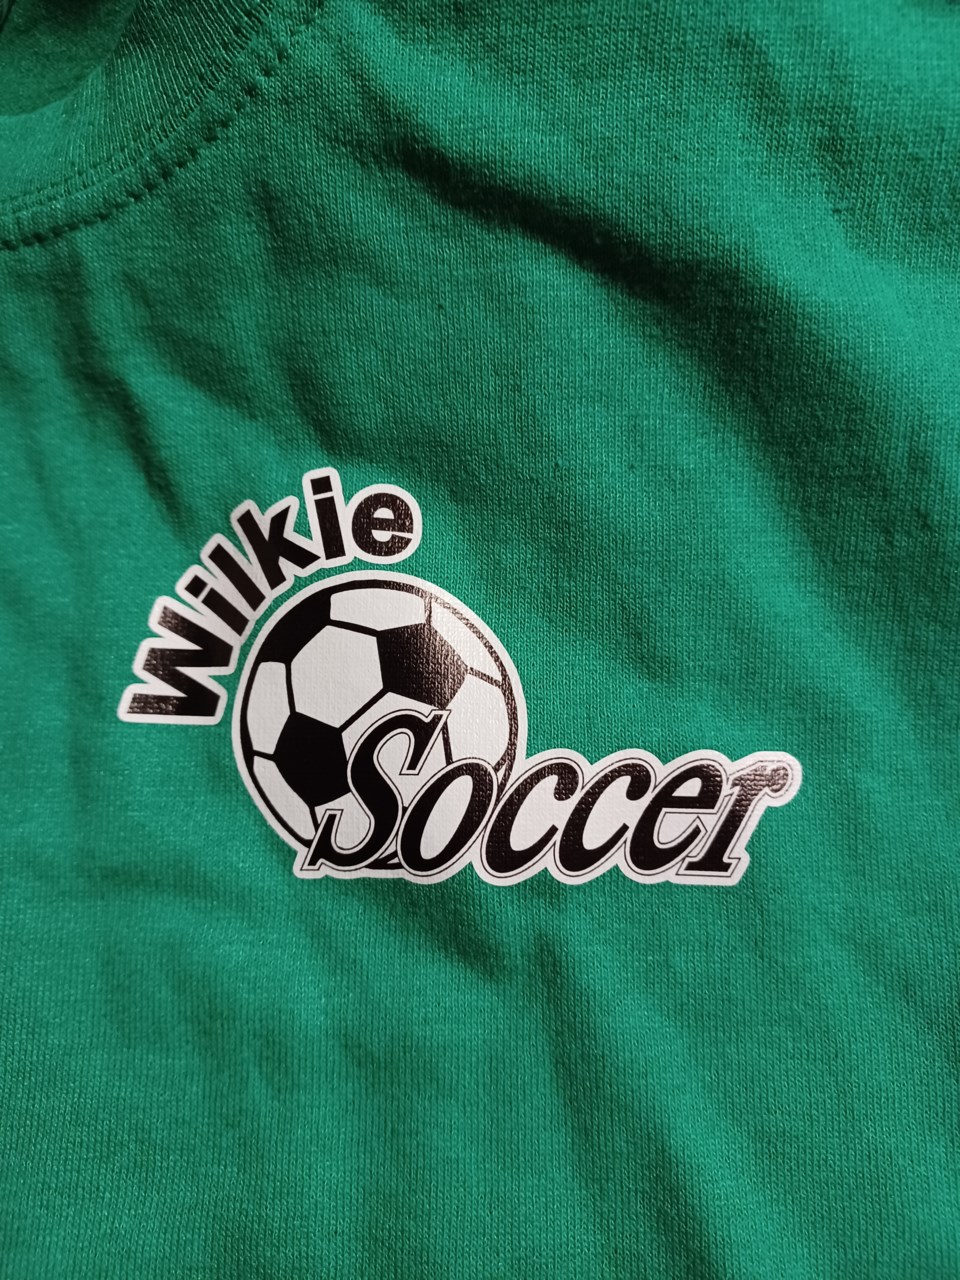 wilkie-soccer-logo